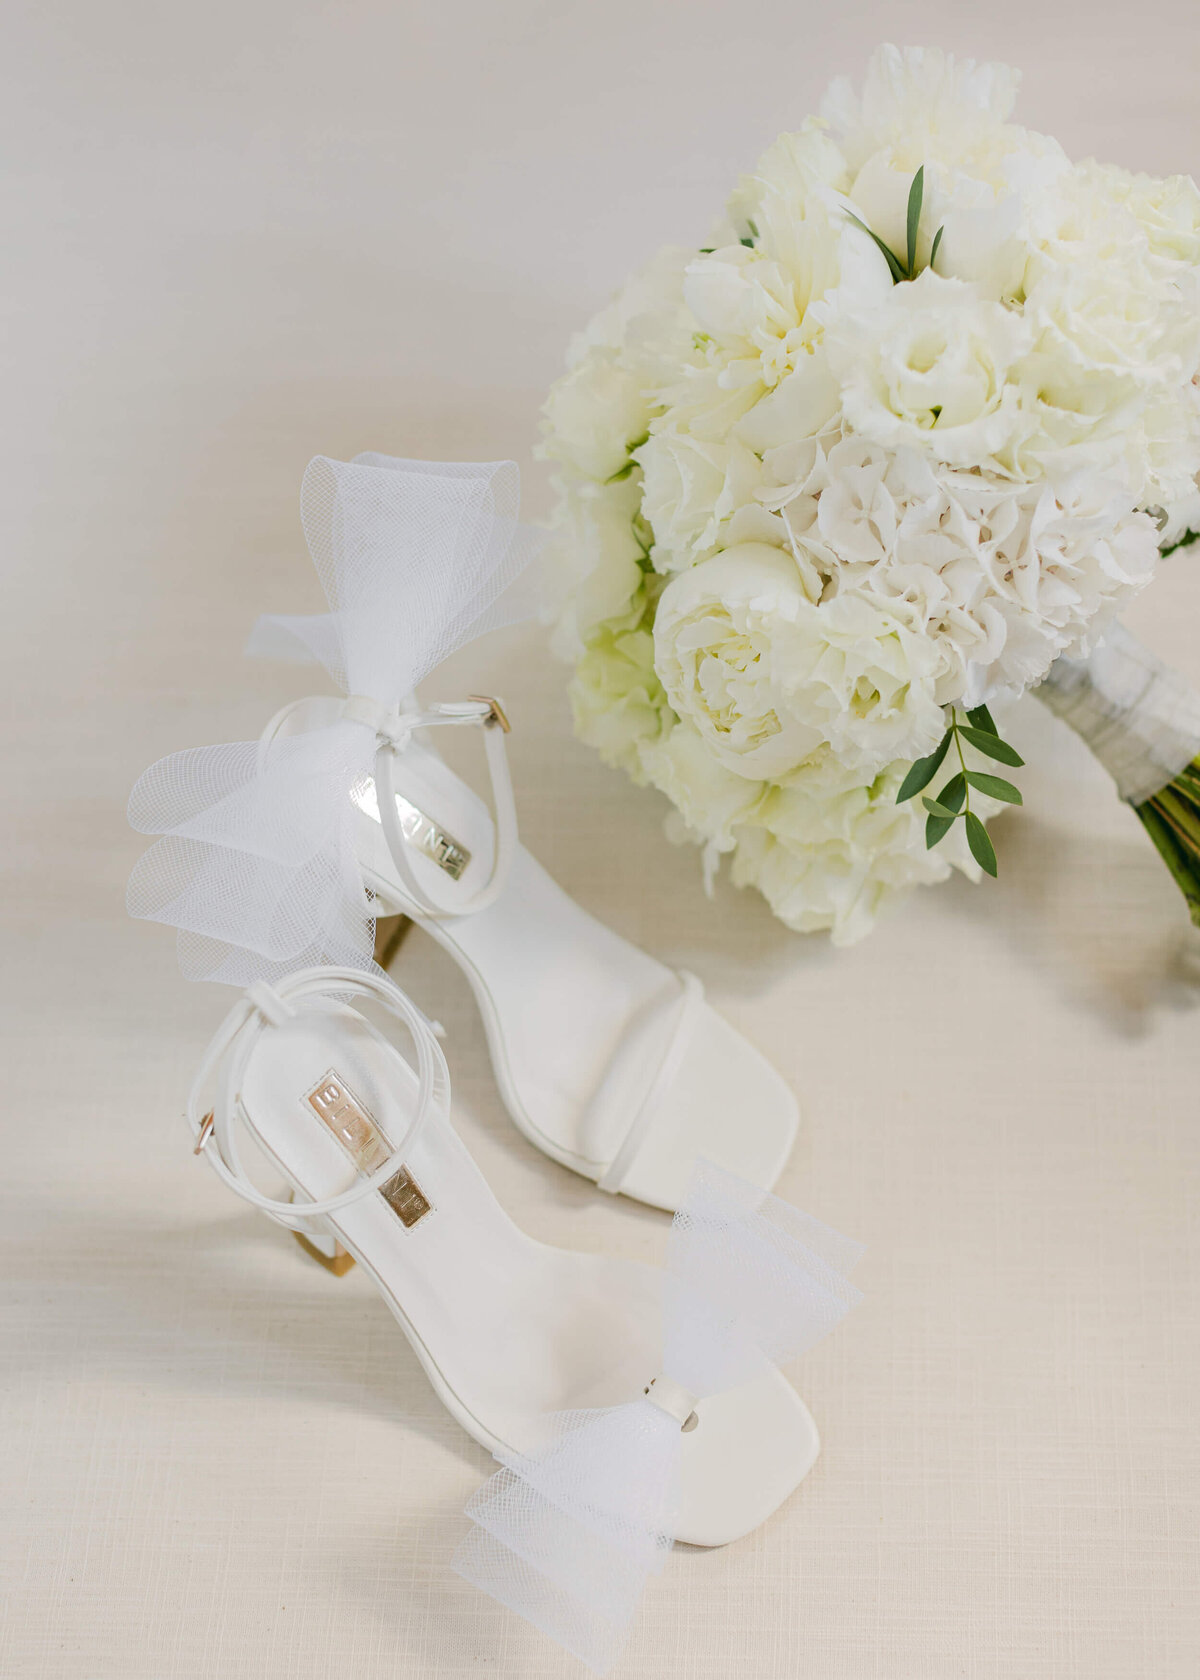 chloe-winstanley-weddings-white-bow-briadal-heels-boquet